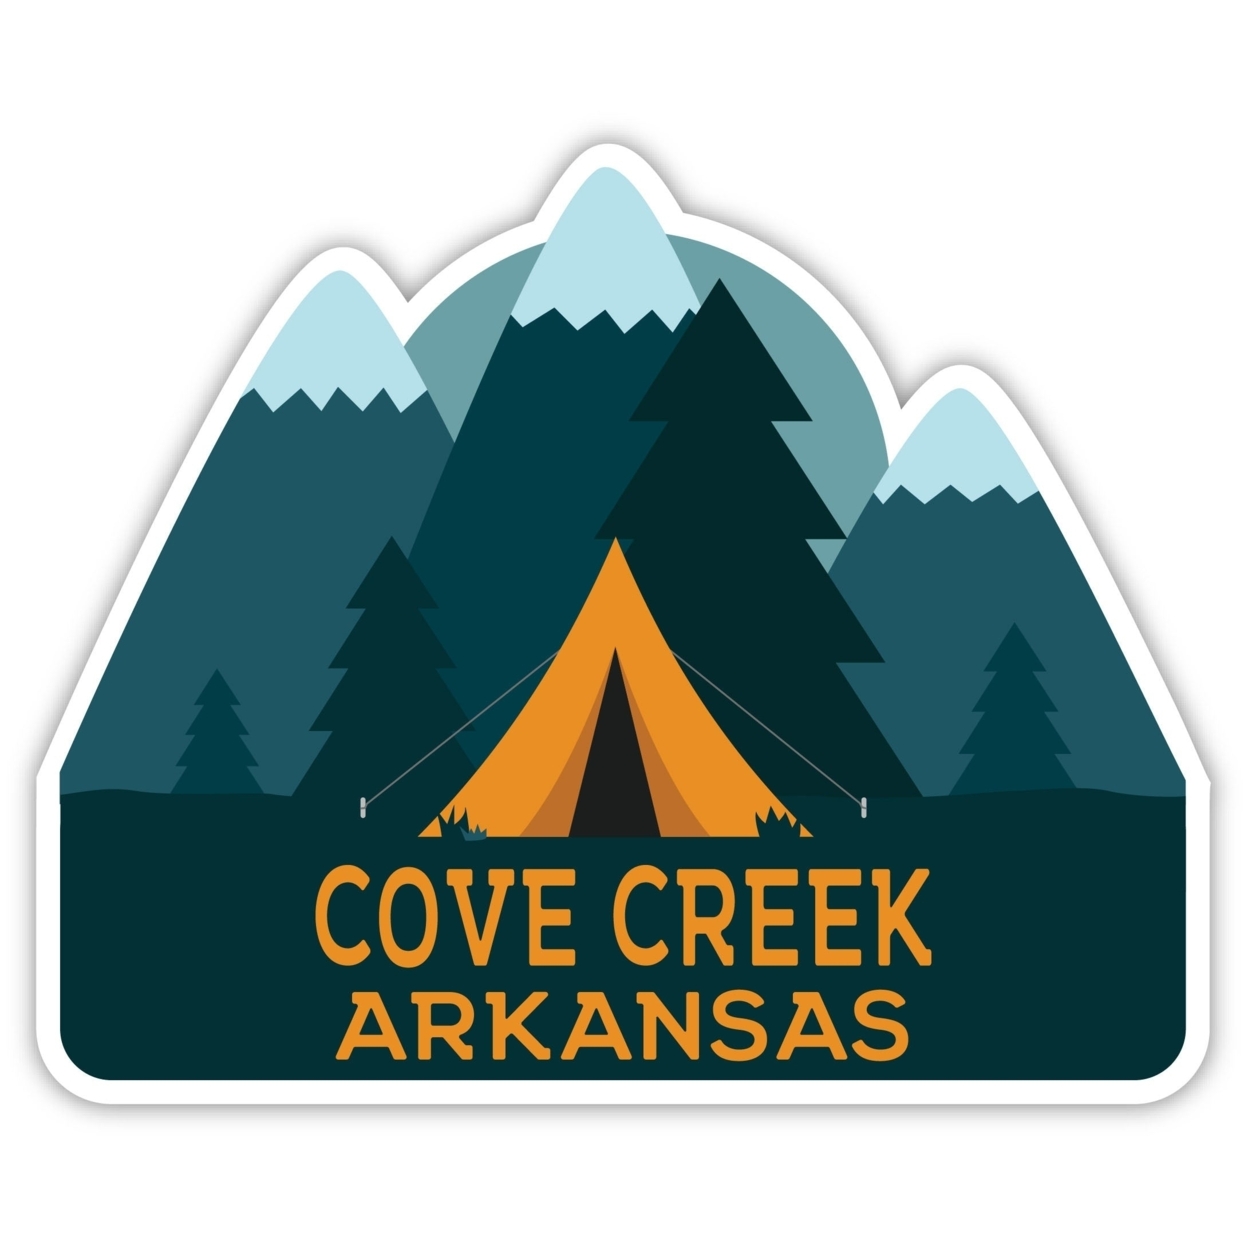 Cove Creek Arkansas Souvenir Decorative Stickers (Choose Theme And Size) - 4-Pack, 8-Inch, Tent